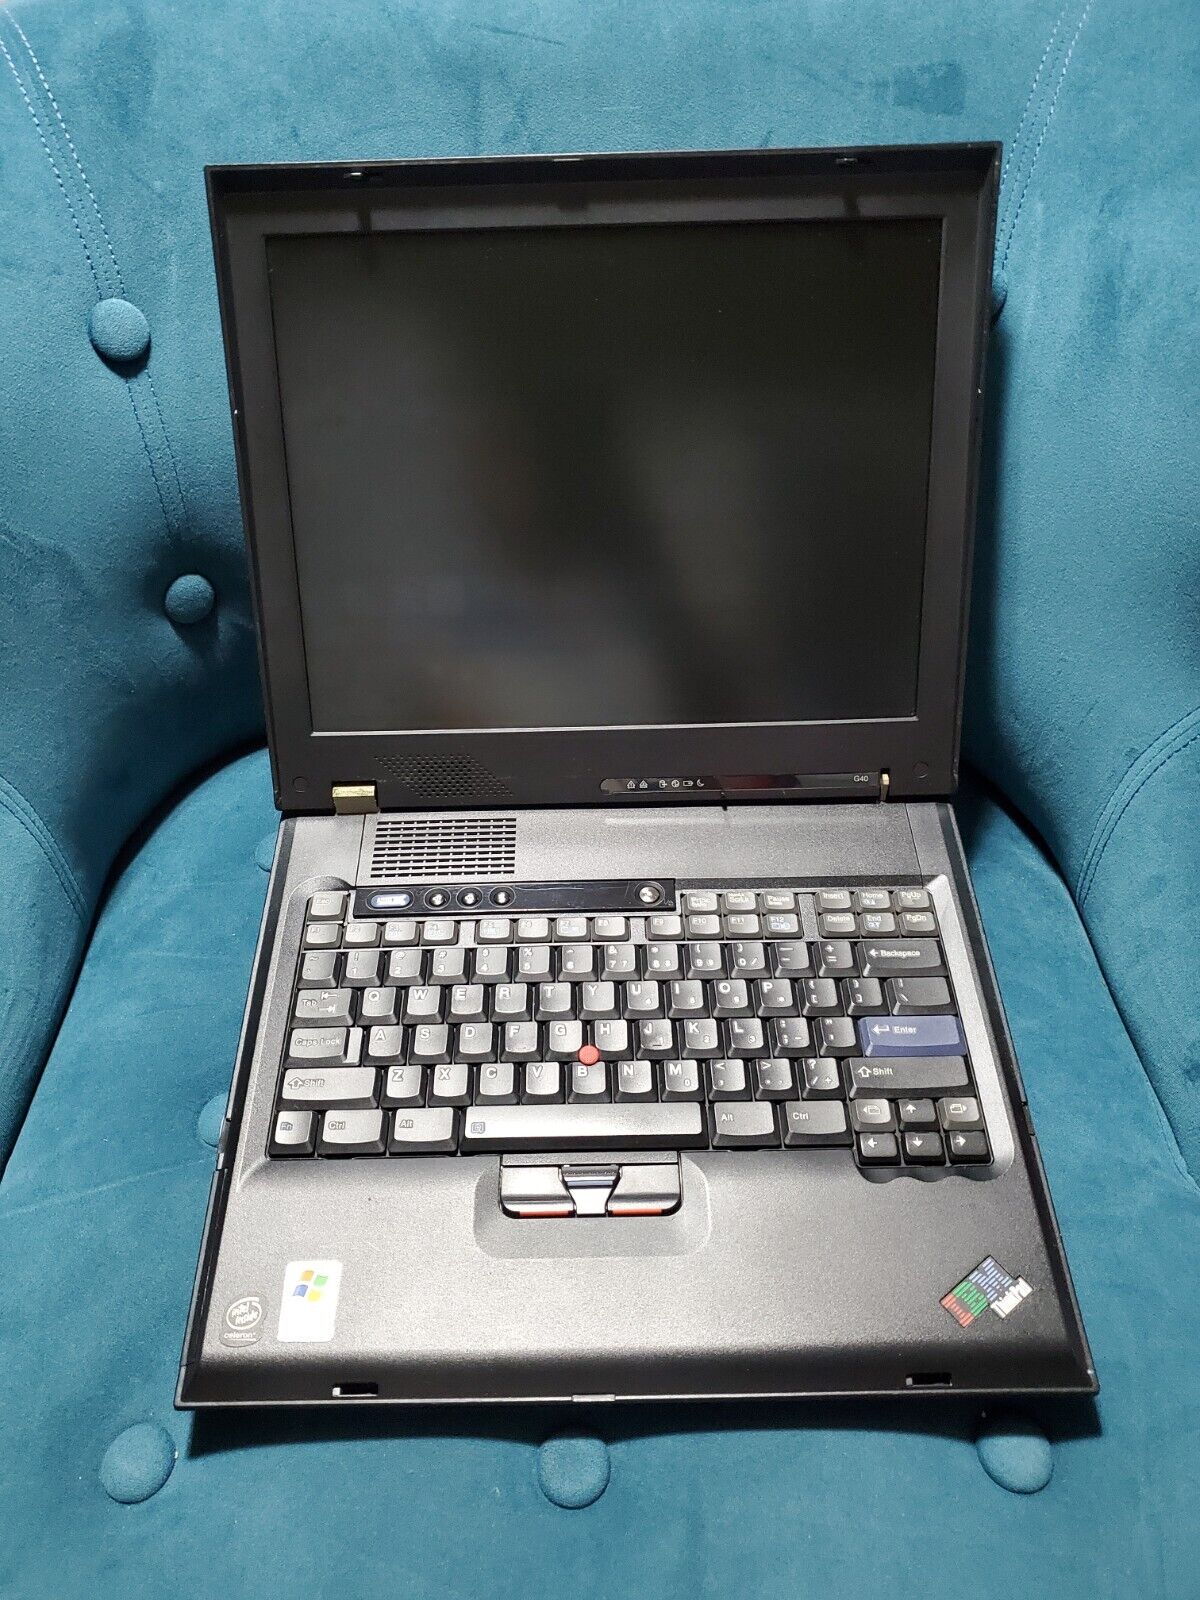 Vtg IBM Thinkpad G40 Laptop, Type 2388. Untested. Windows XP Professional  